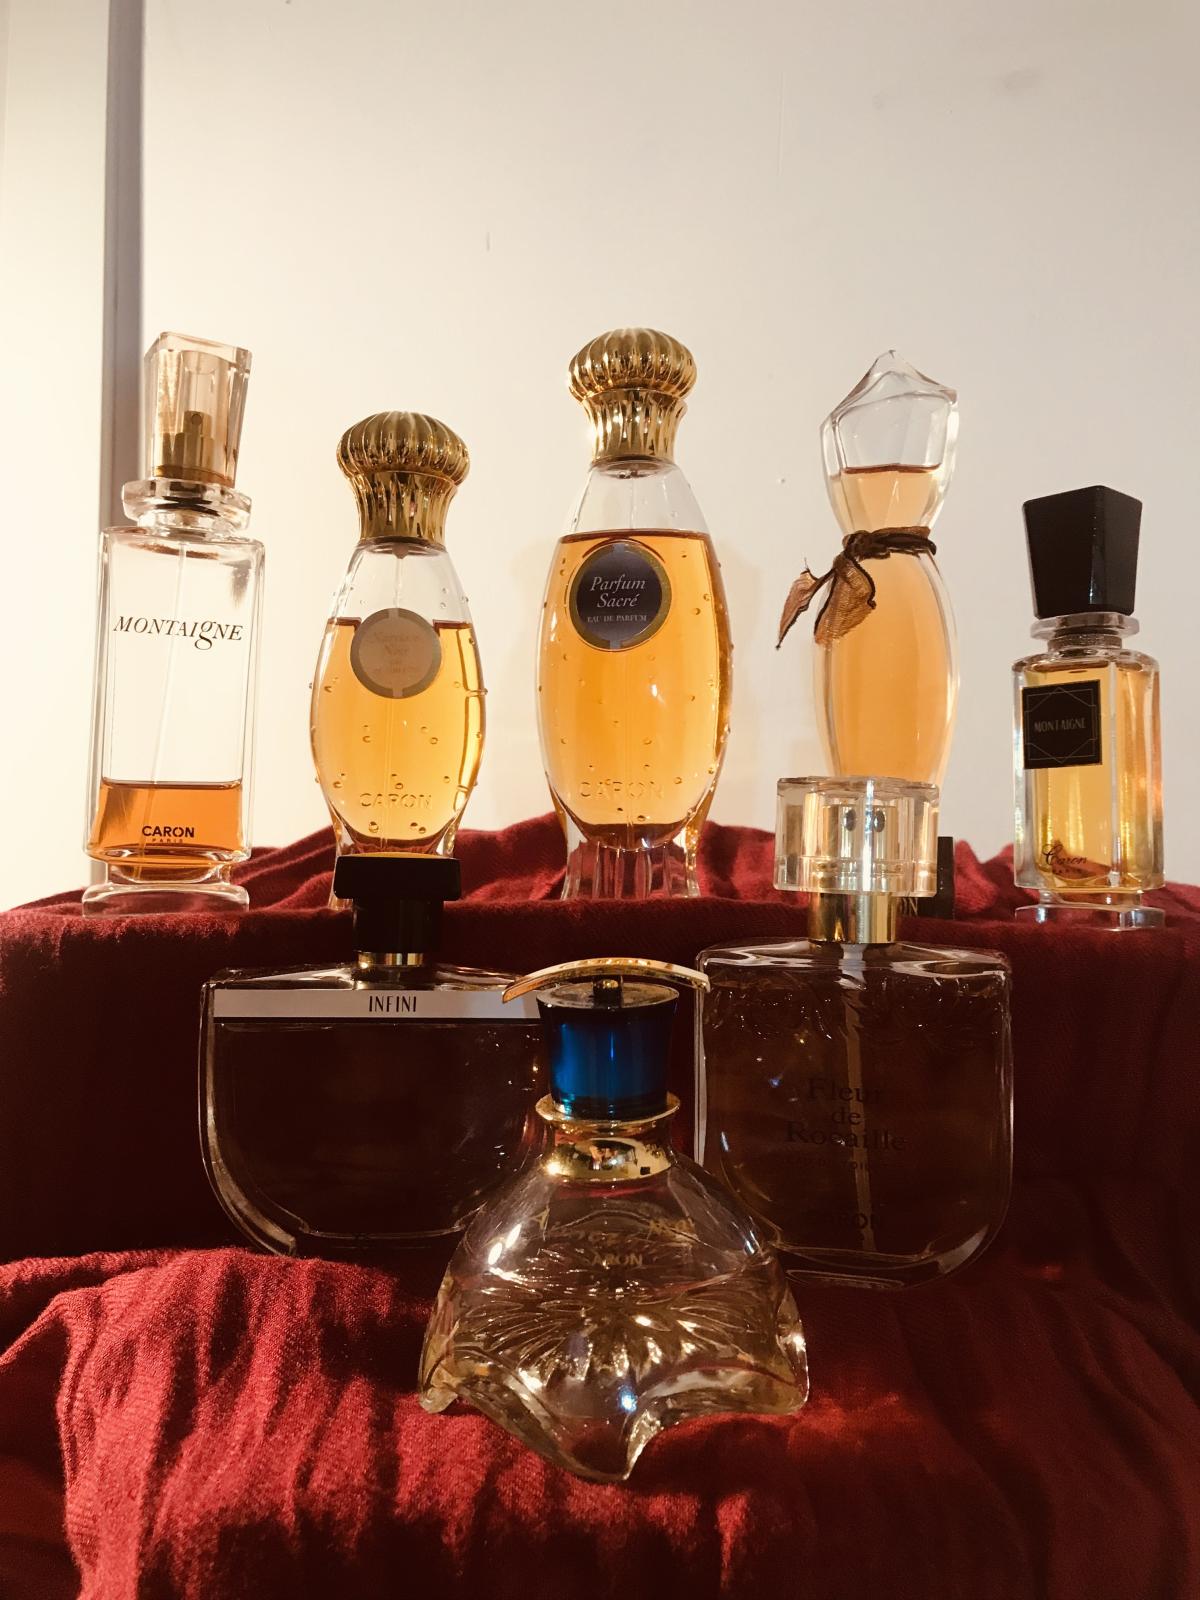 Parfum Sacre Caron perfume - a fragrance for women 1990